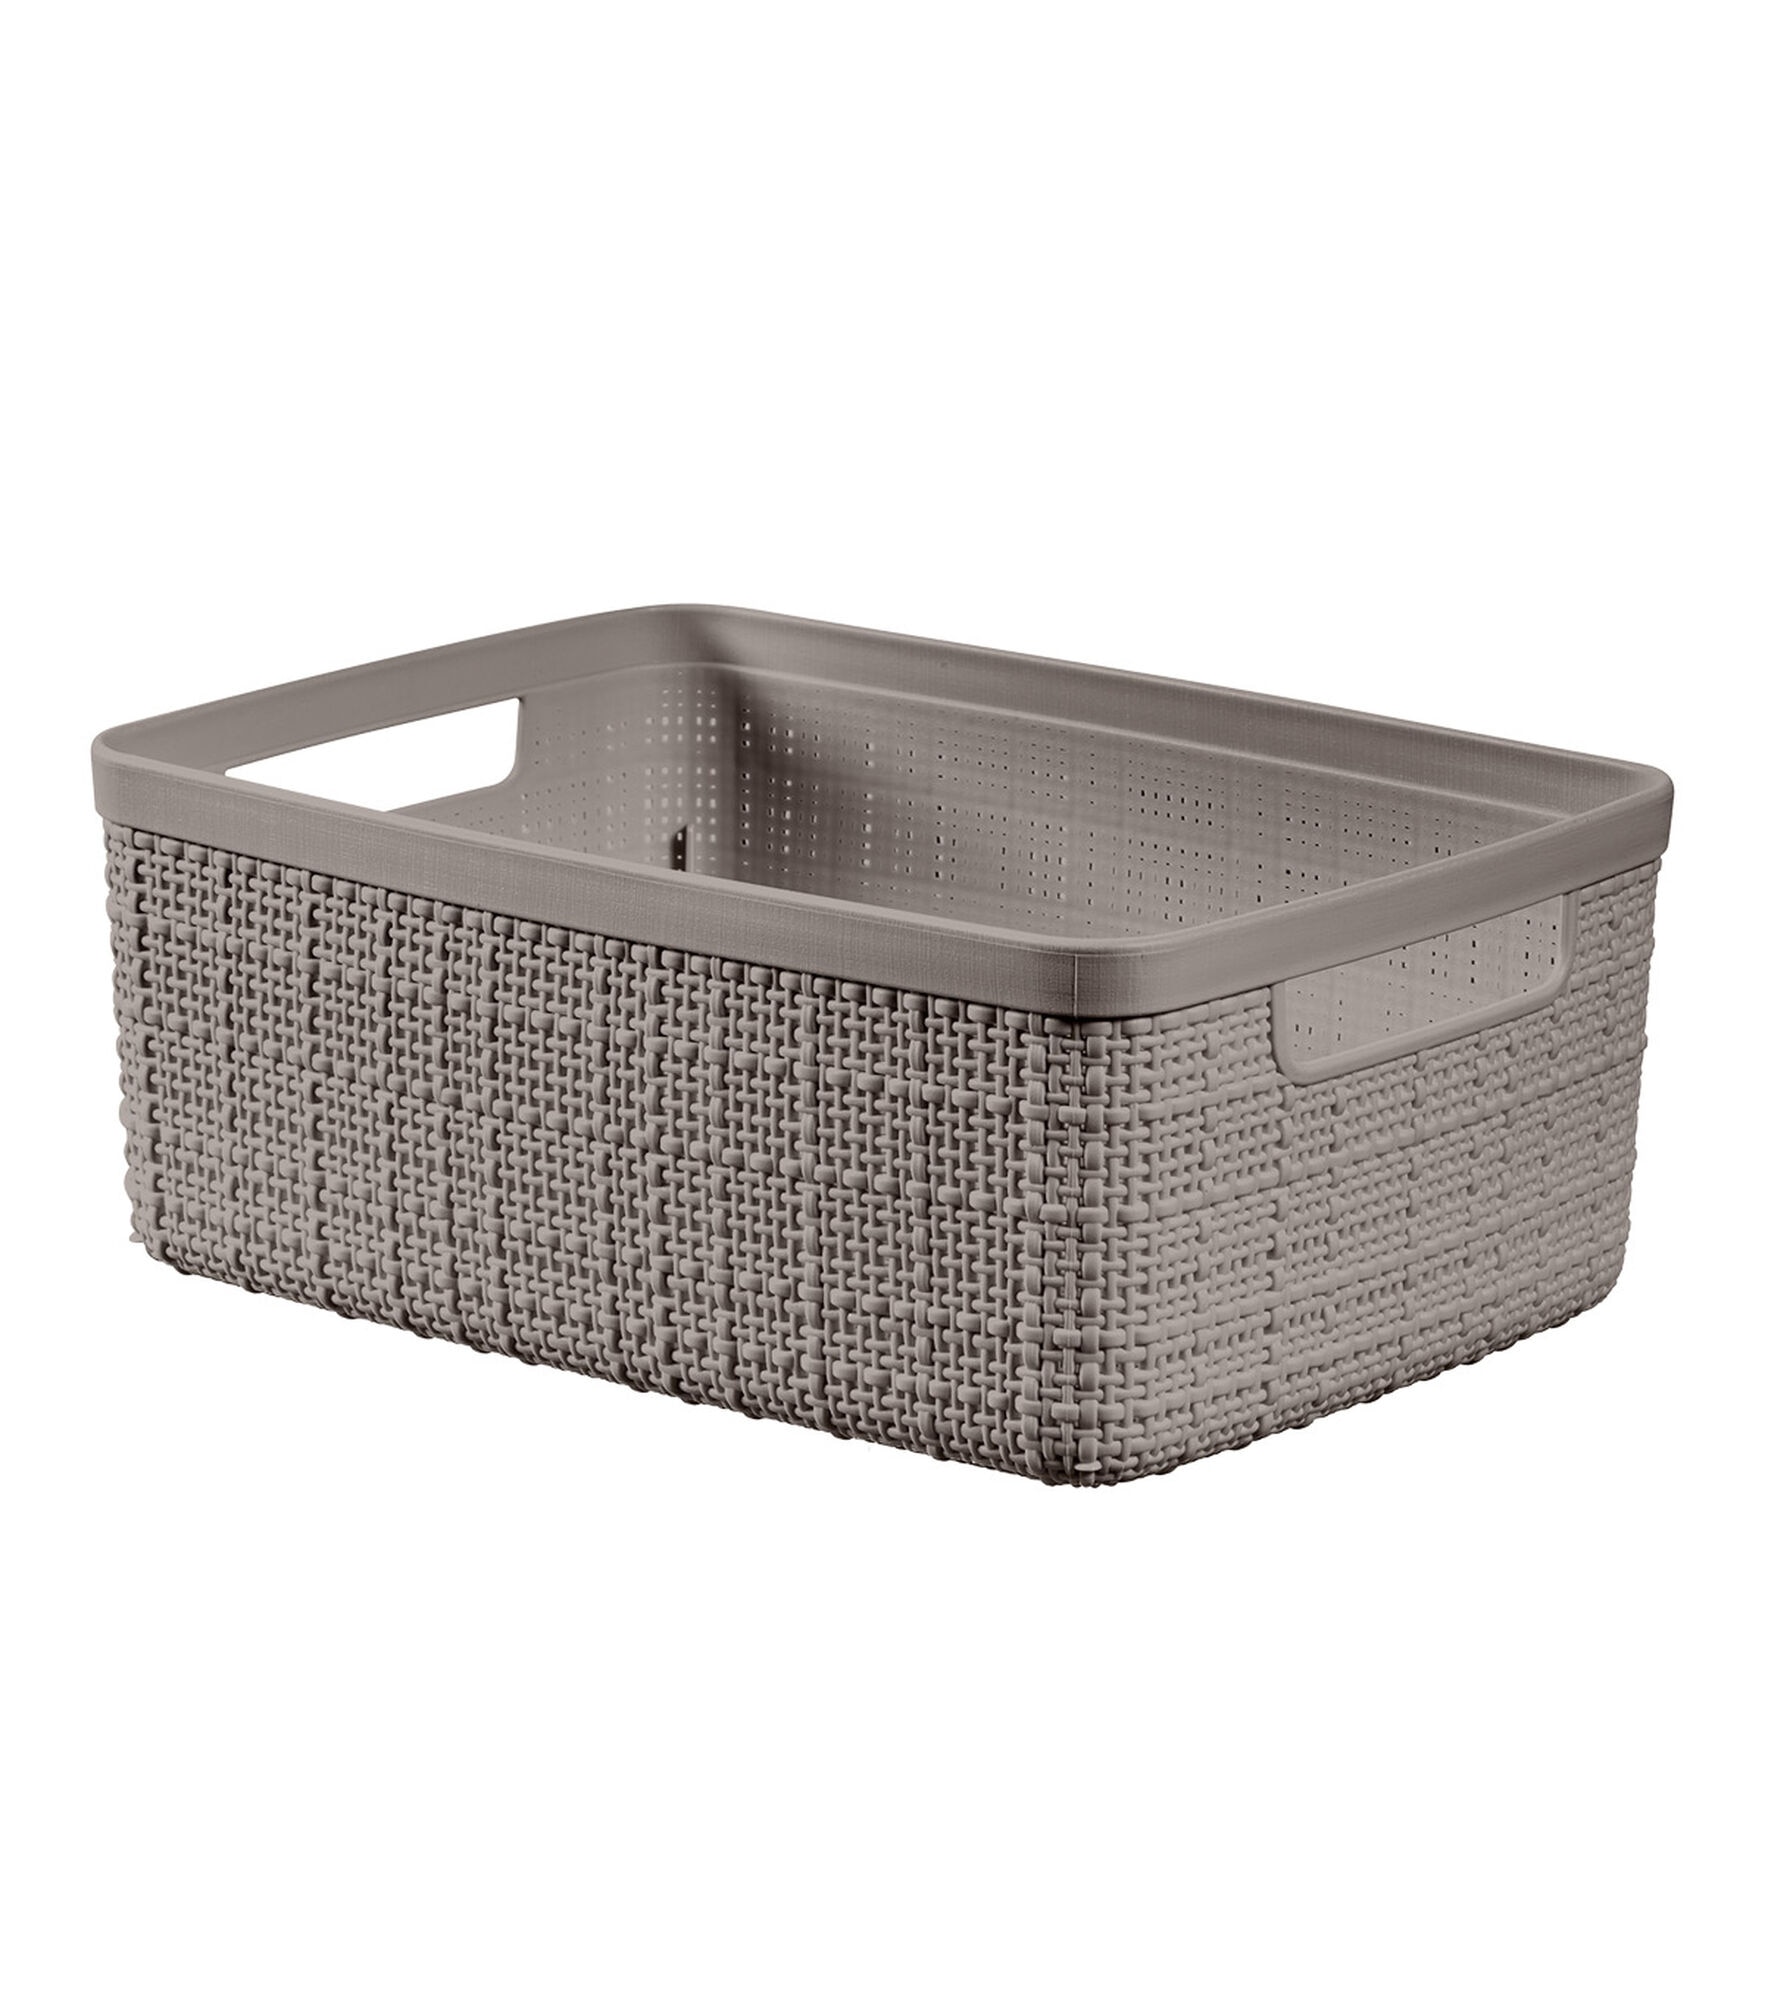 4.5 Liter Resin Basket With Cutout Handles, Cobblestone, hi-res